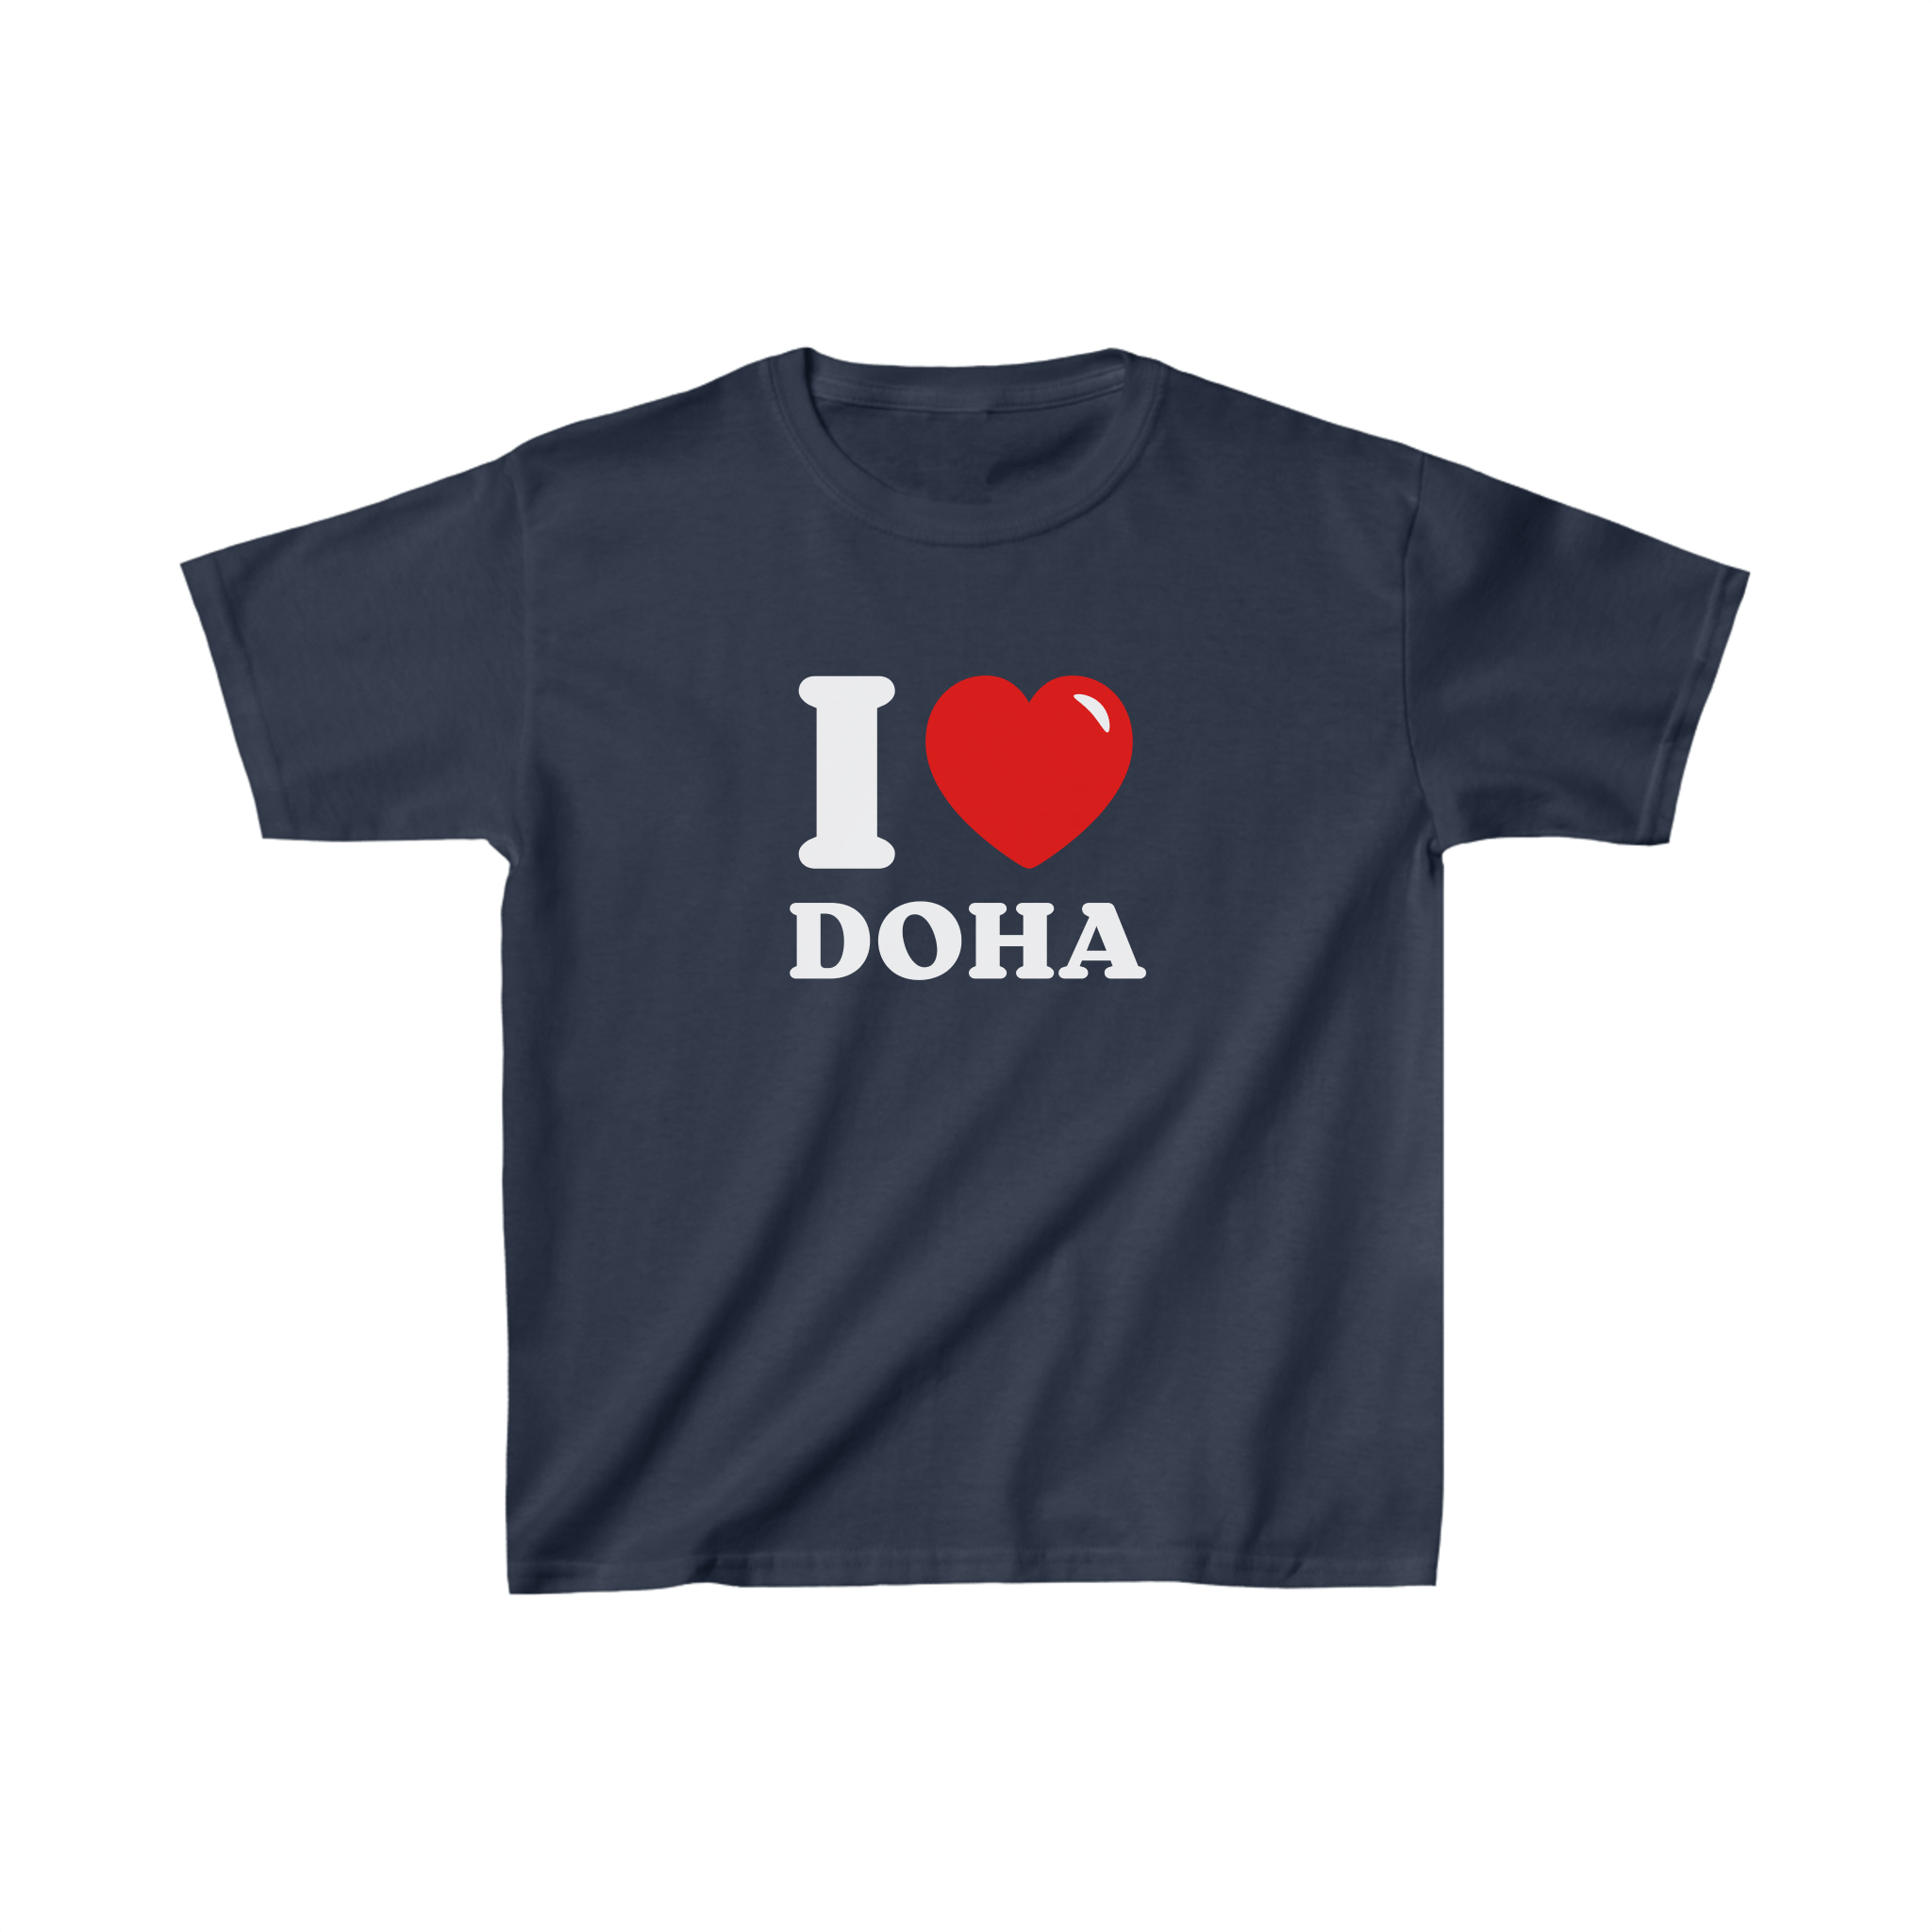 'I love Doha' baby tee - In Print We Trust